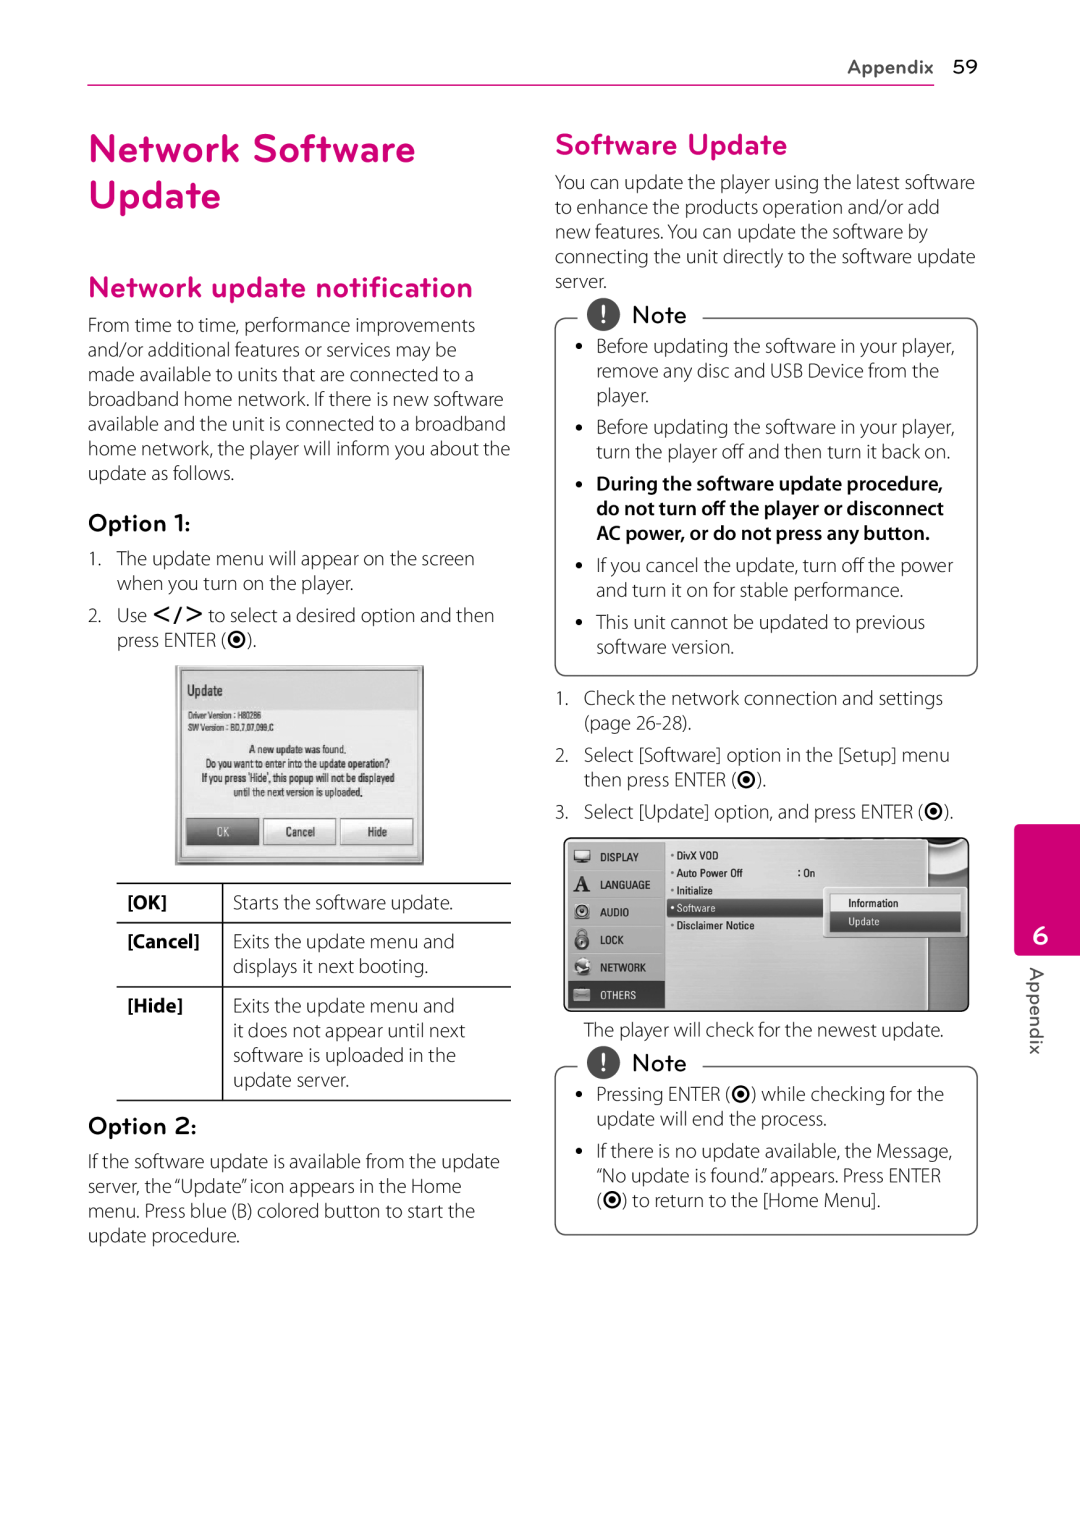 LG Electronics SH96TA-W, SH96TA-S Network Software Update, Network update notification, Option, Appendix, Hide, Cancel 